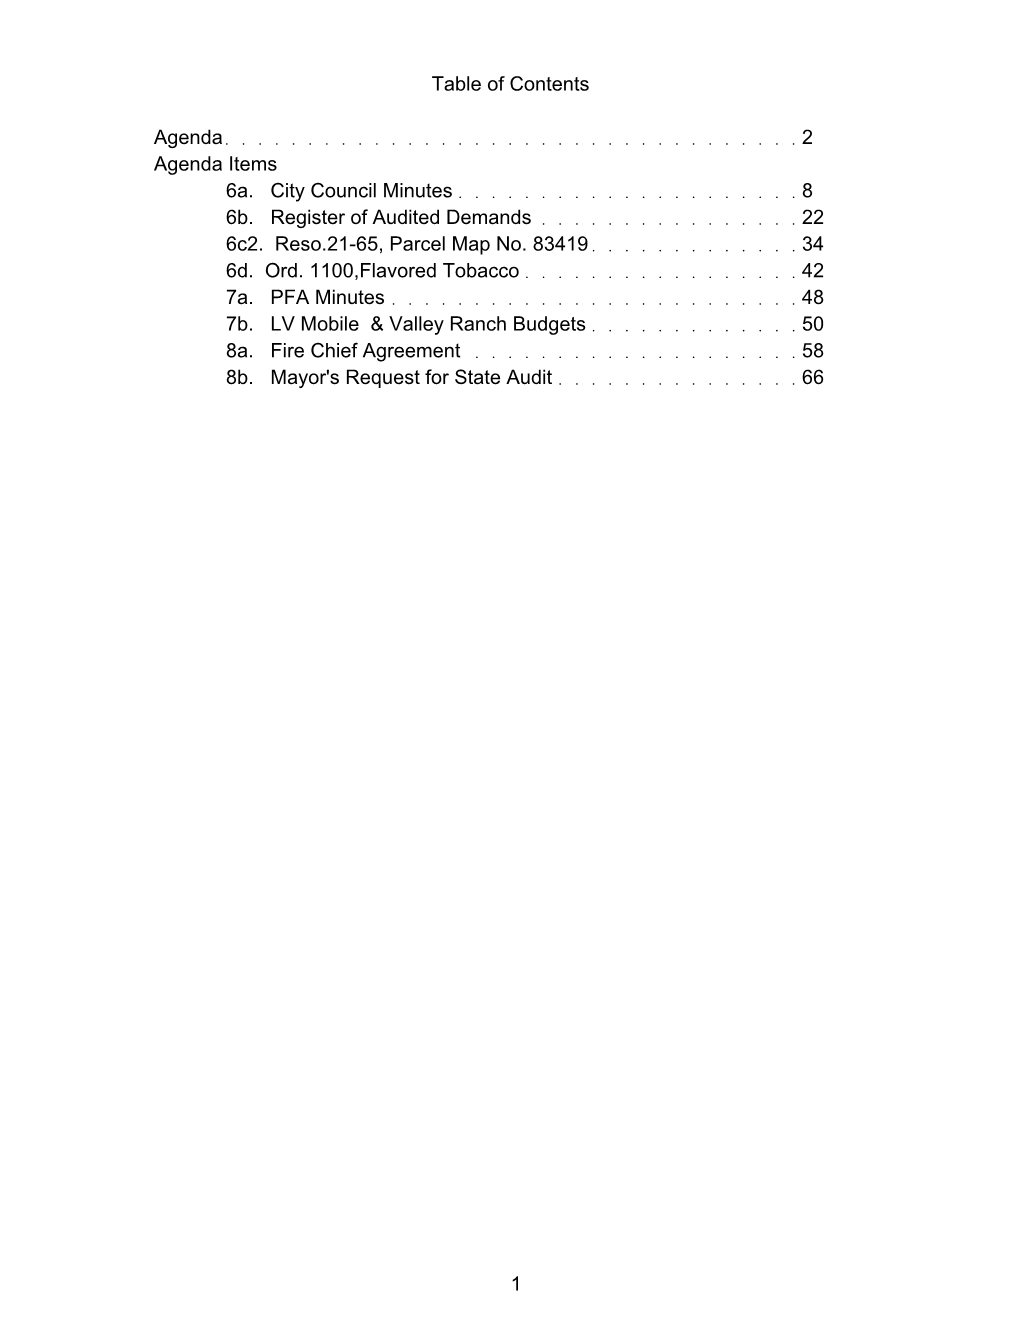 Table of Contents Agenda 2 Agenda Items 6A. City Council Minutes 8 6B